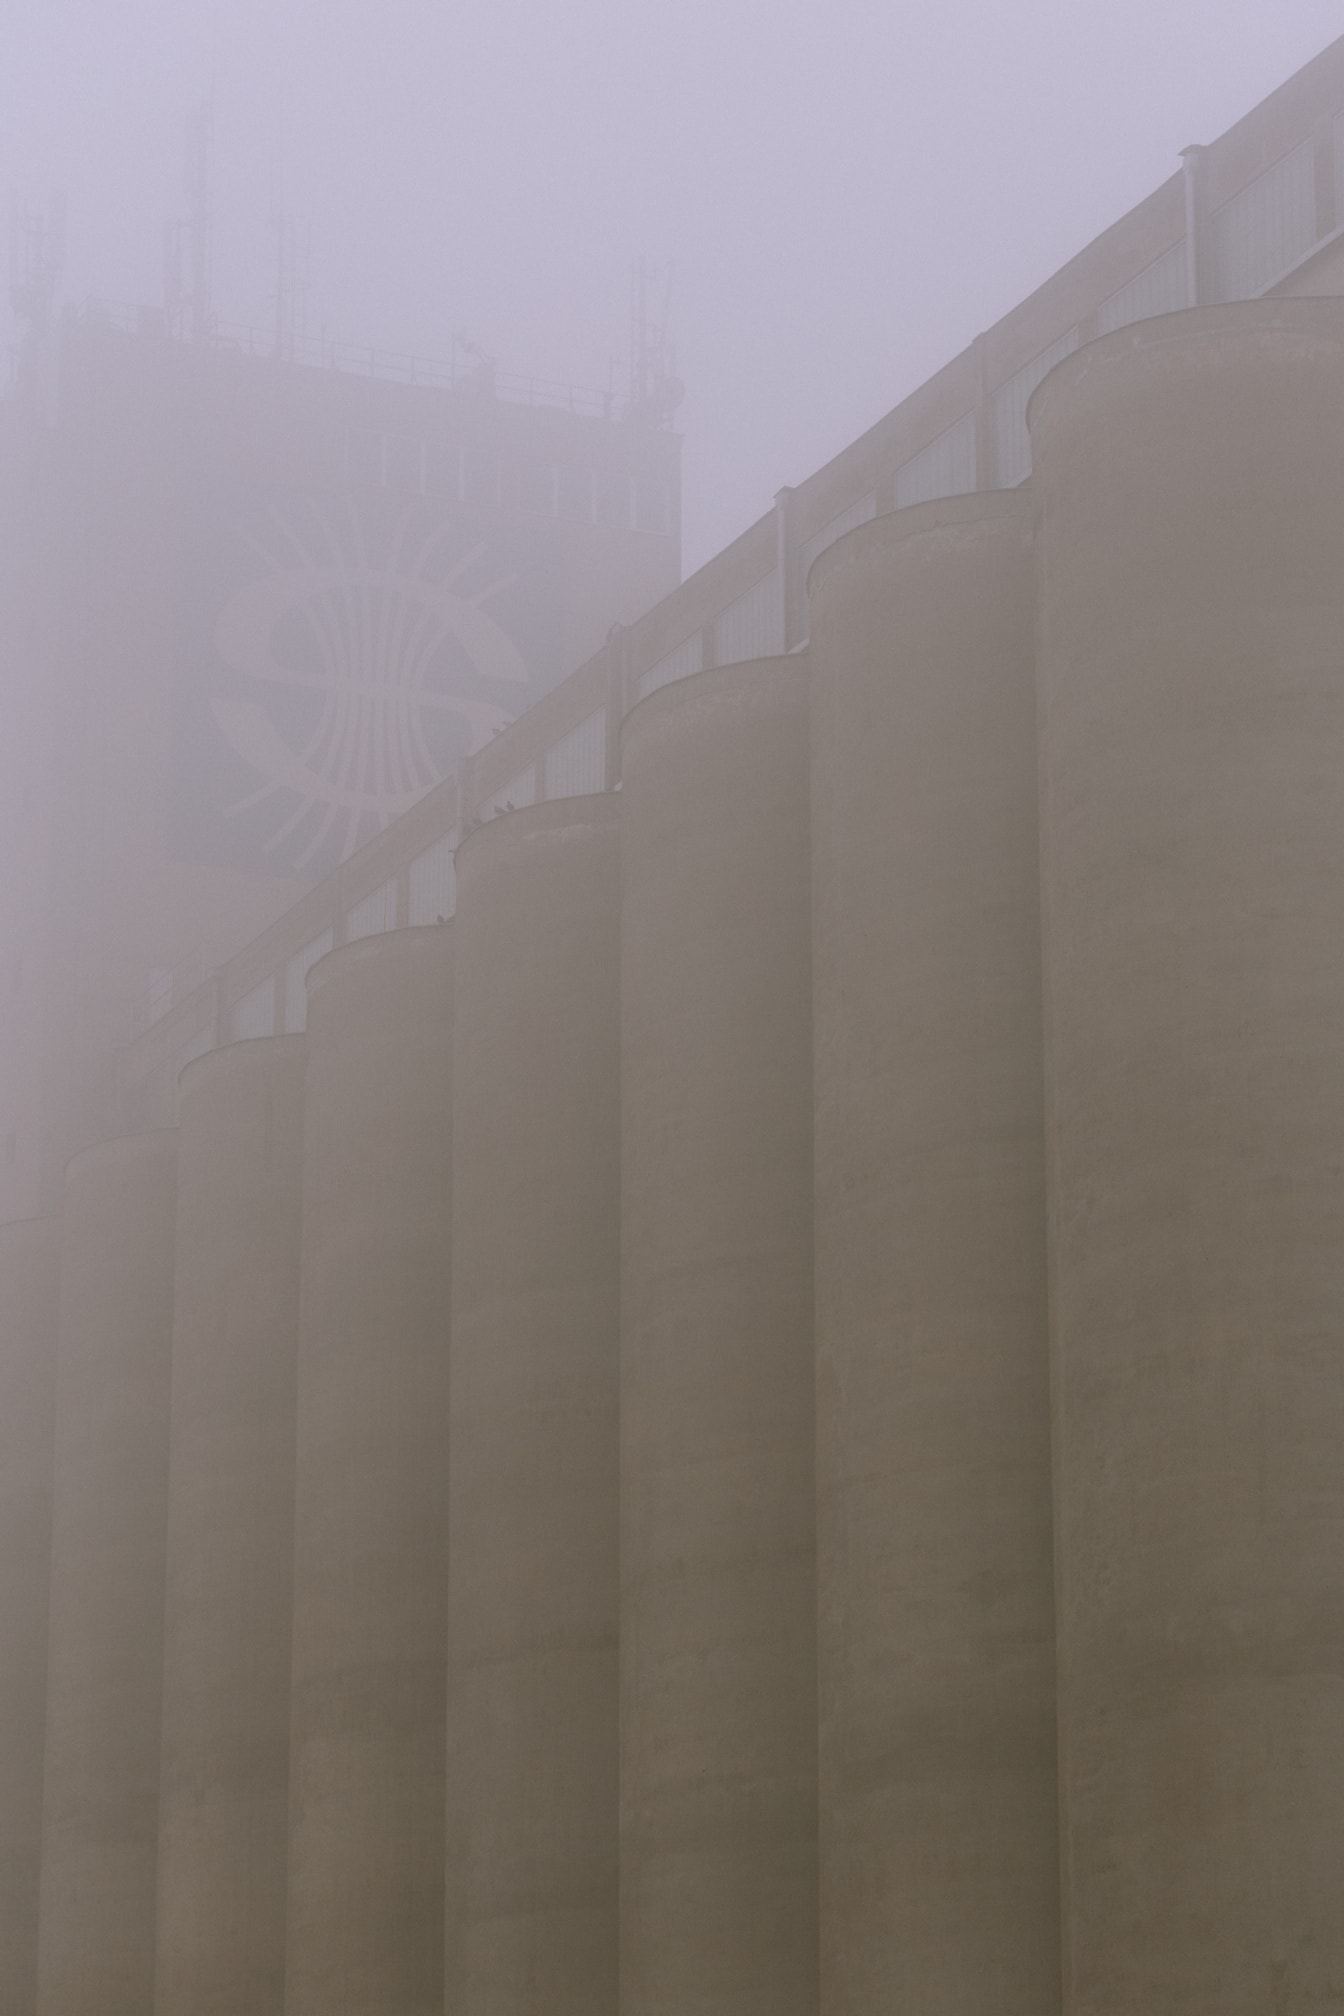 Tall concrete silo building in socialist architectural style in dense fog